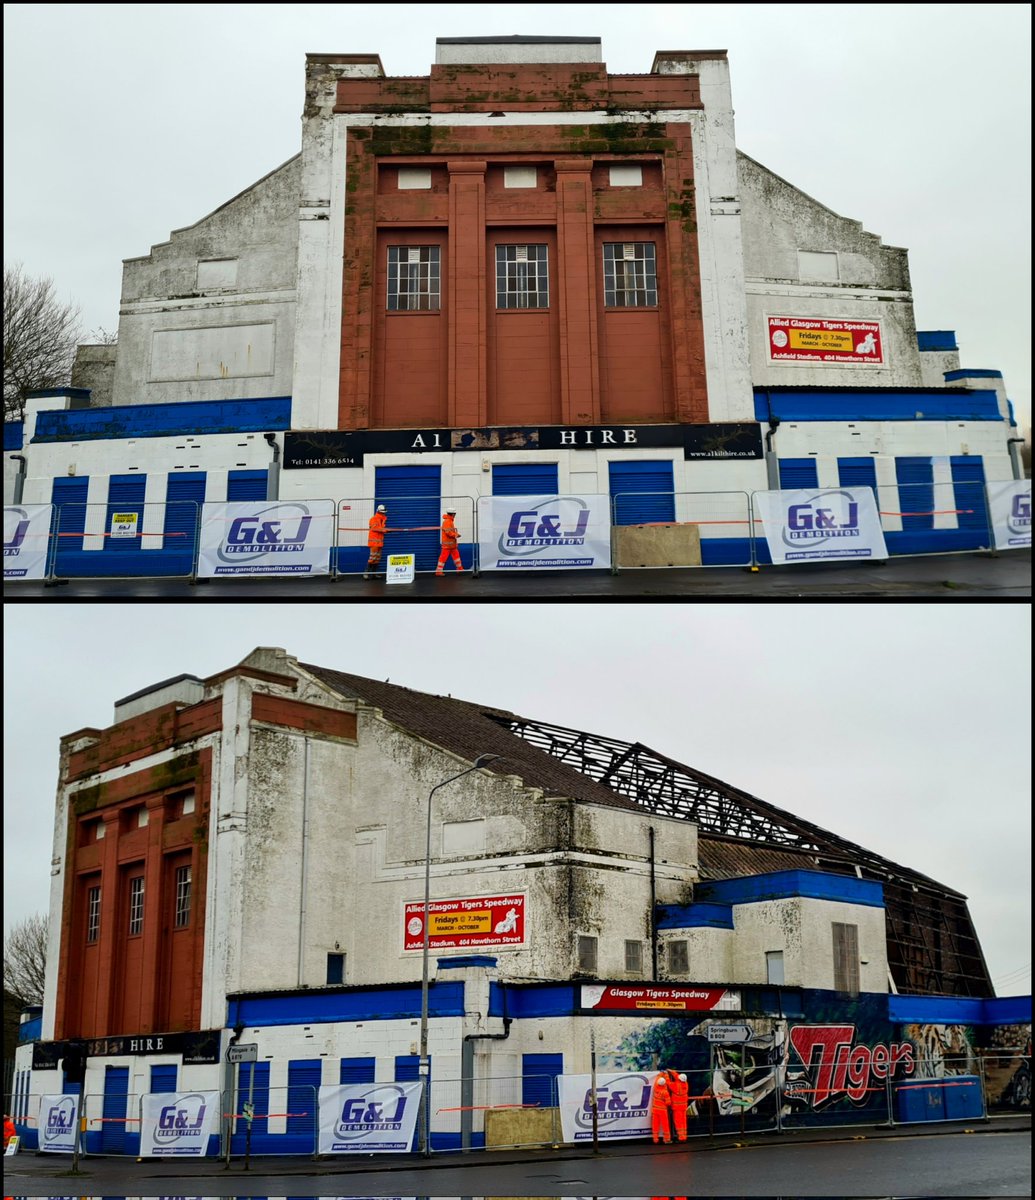 Despite efforts to save it, work has started to demolish the Art Deco Mecca cinema on Balmore Road in the Possil area of Glasgow. 

Cont./

#glasgow #architecture #glasgowbuildings #urbanredevelopment #demolition #listedbuilding #artdeco #possil